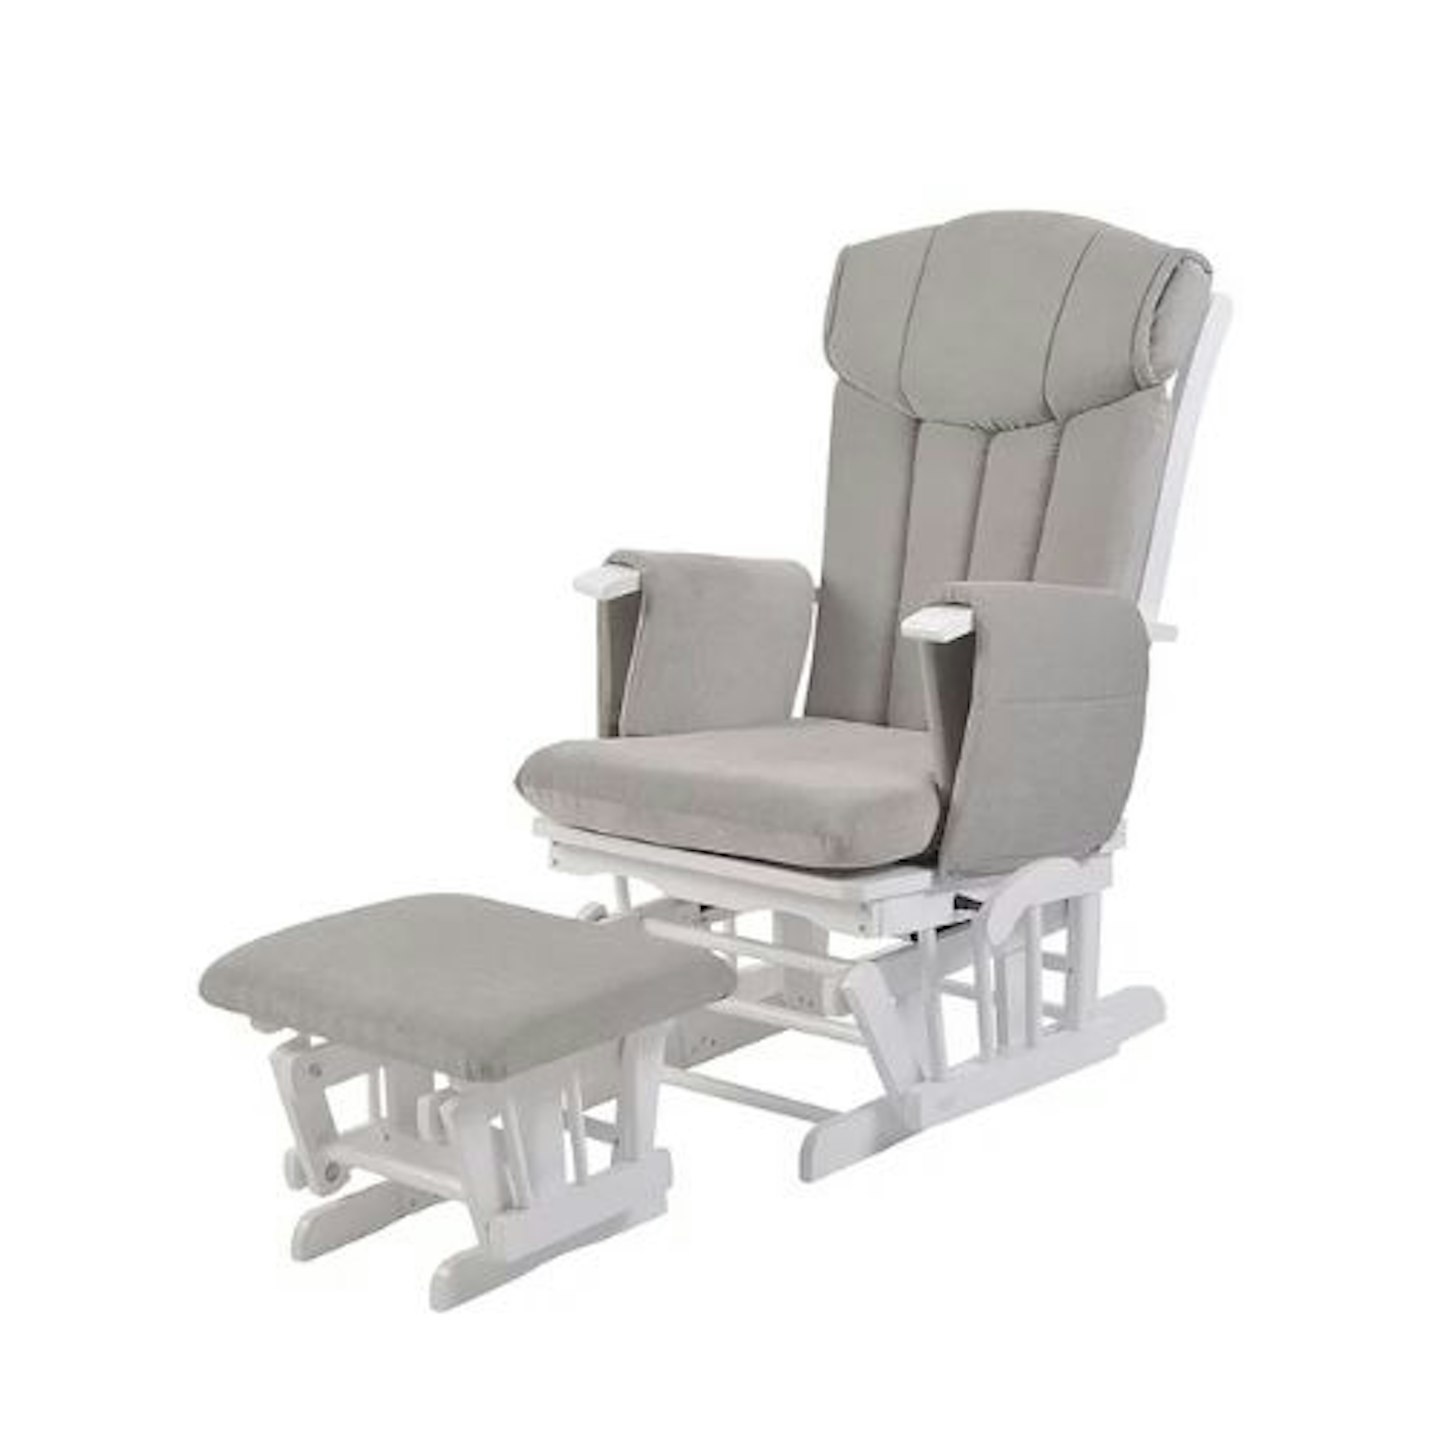 https://images.bauerhosting.com/affiliates/sites/12/2023/06/Kub-Chatsworth-Glider-Nursing-Chair-and-Foot-Stool-Grey-.jpg?auto=format&w=1440&q=80